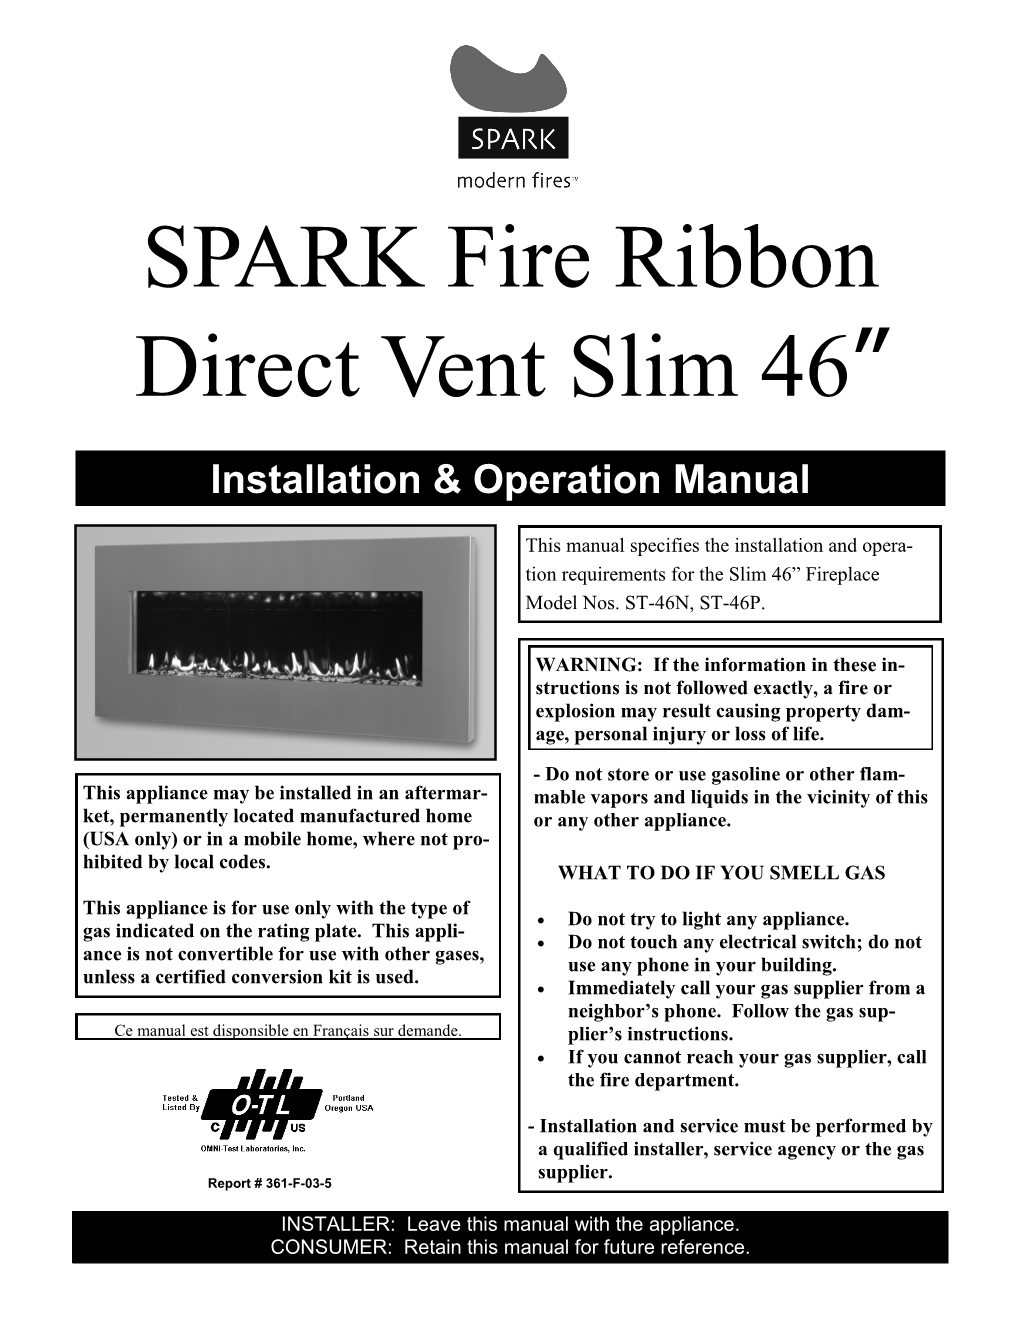 SPARK Fire Ribbon Direct Vent Slim 46”